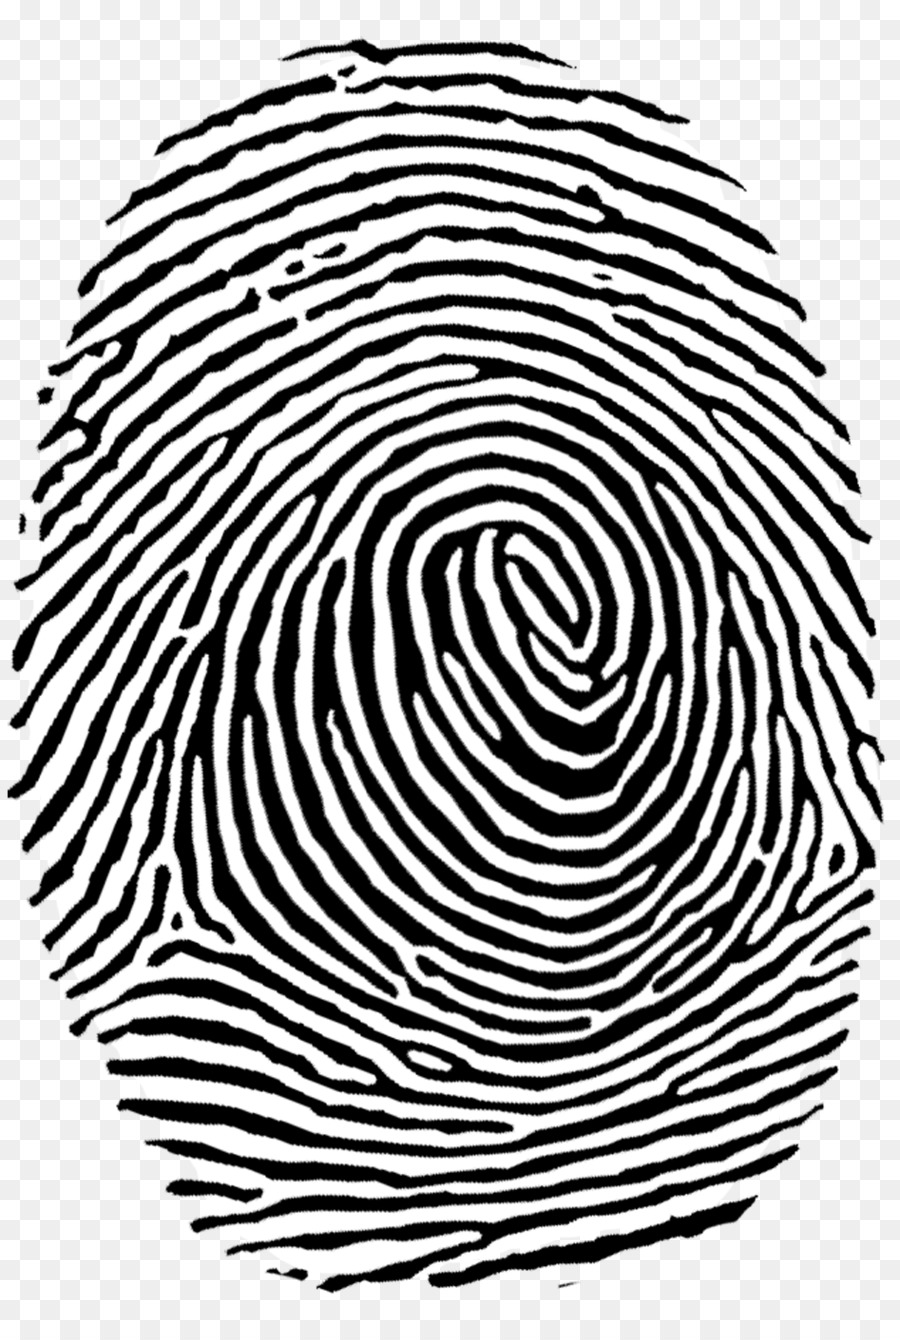 Fingerprint Authentication Clip art - fingerprint png download - 947*1395 - Free Transparent Fingerprint png Download.